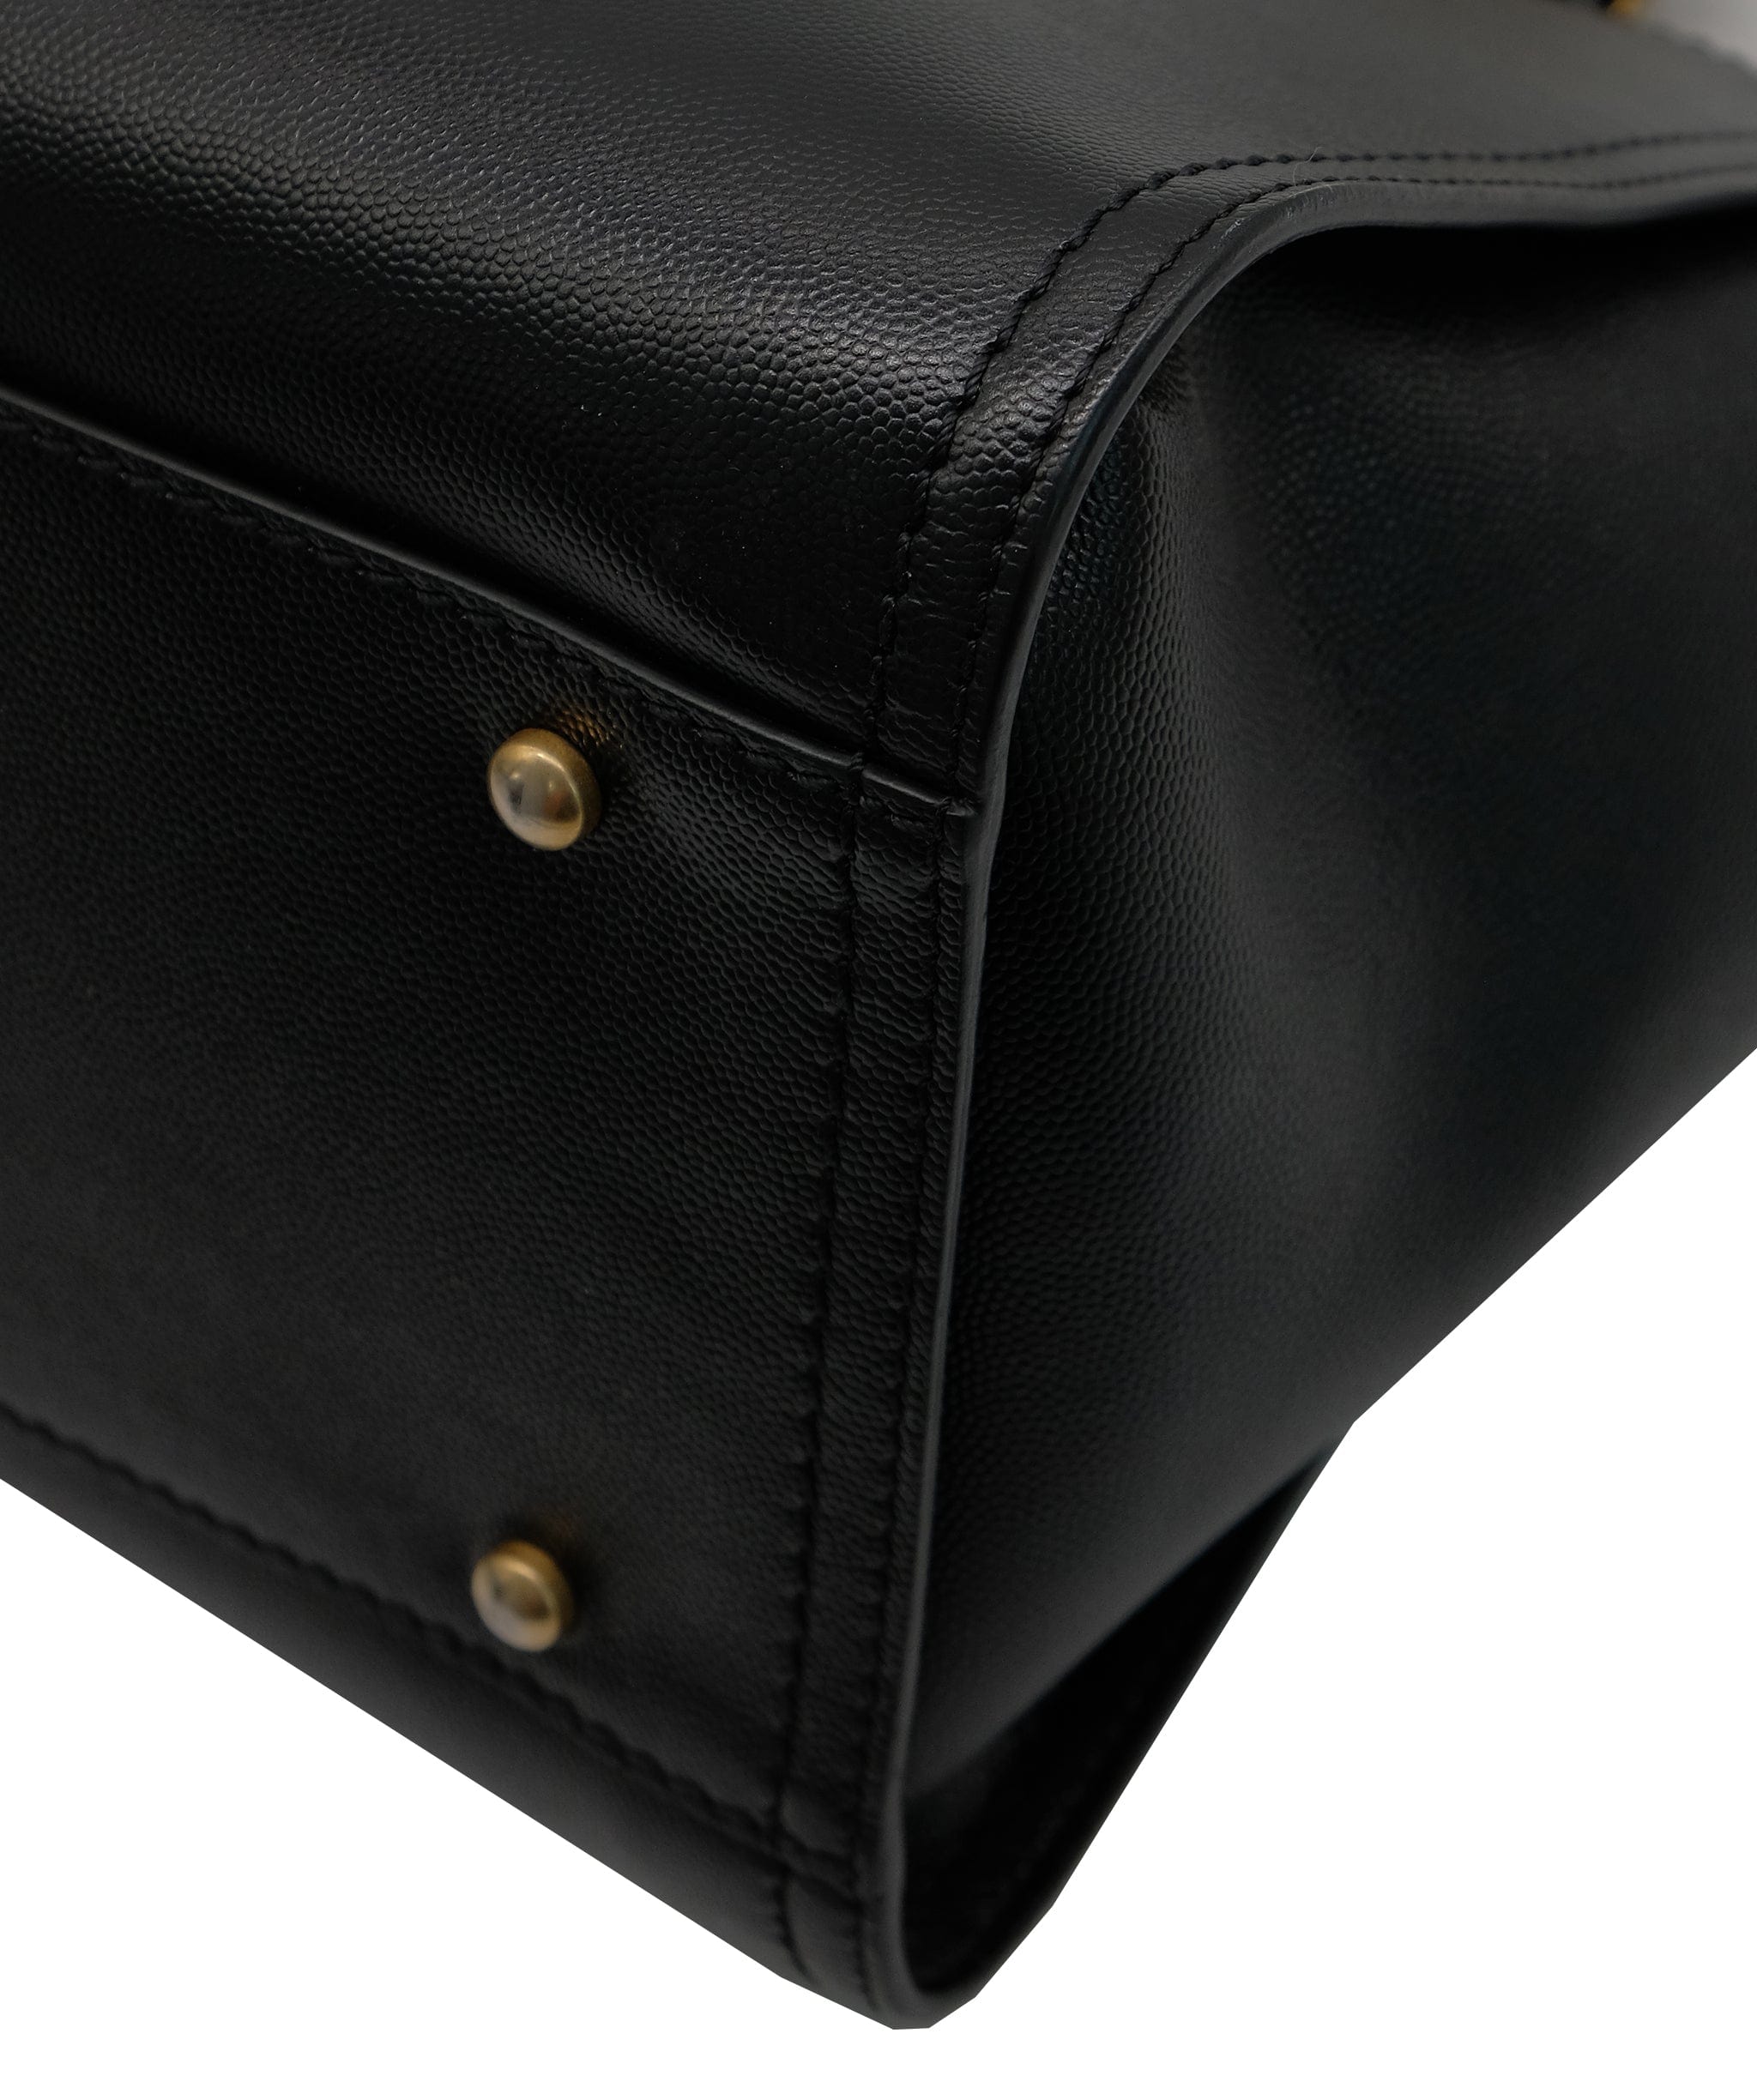 Chanel Chanel Deauville Black Studded Leather Handbag RJC2863